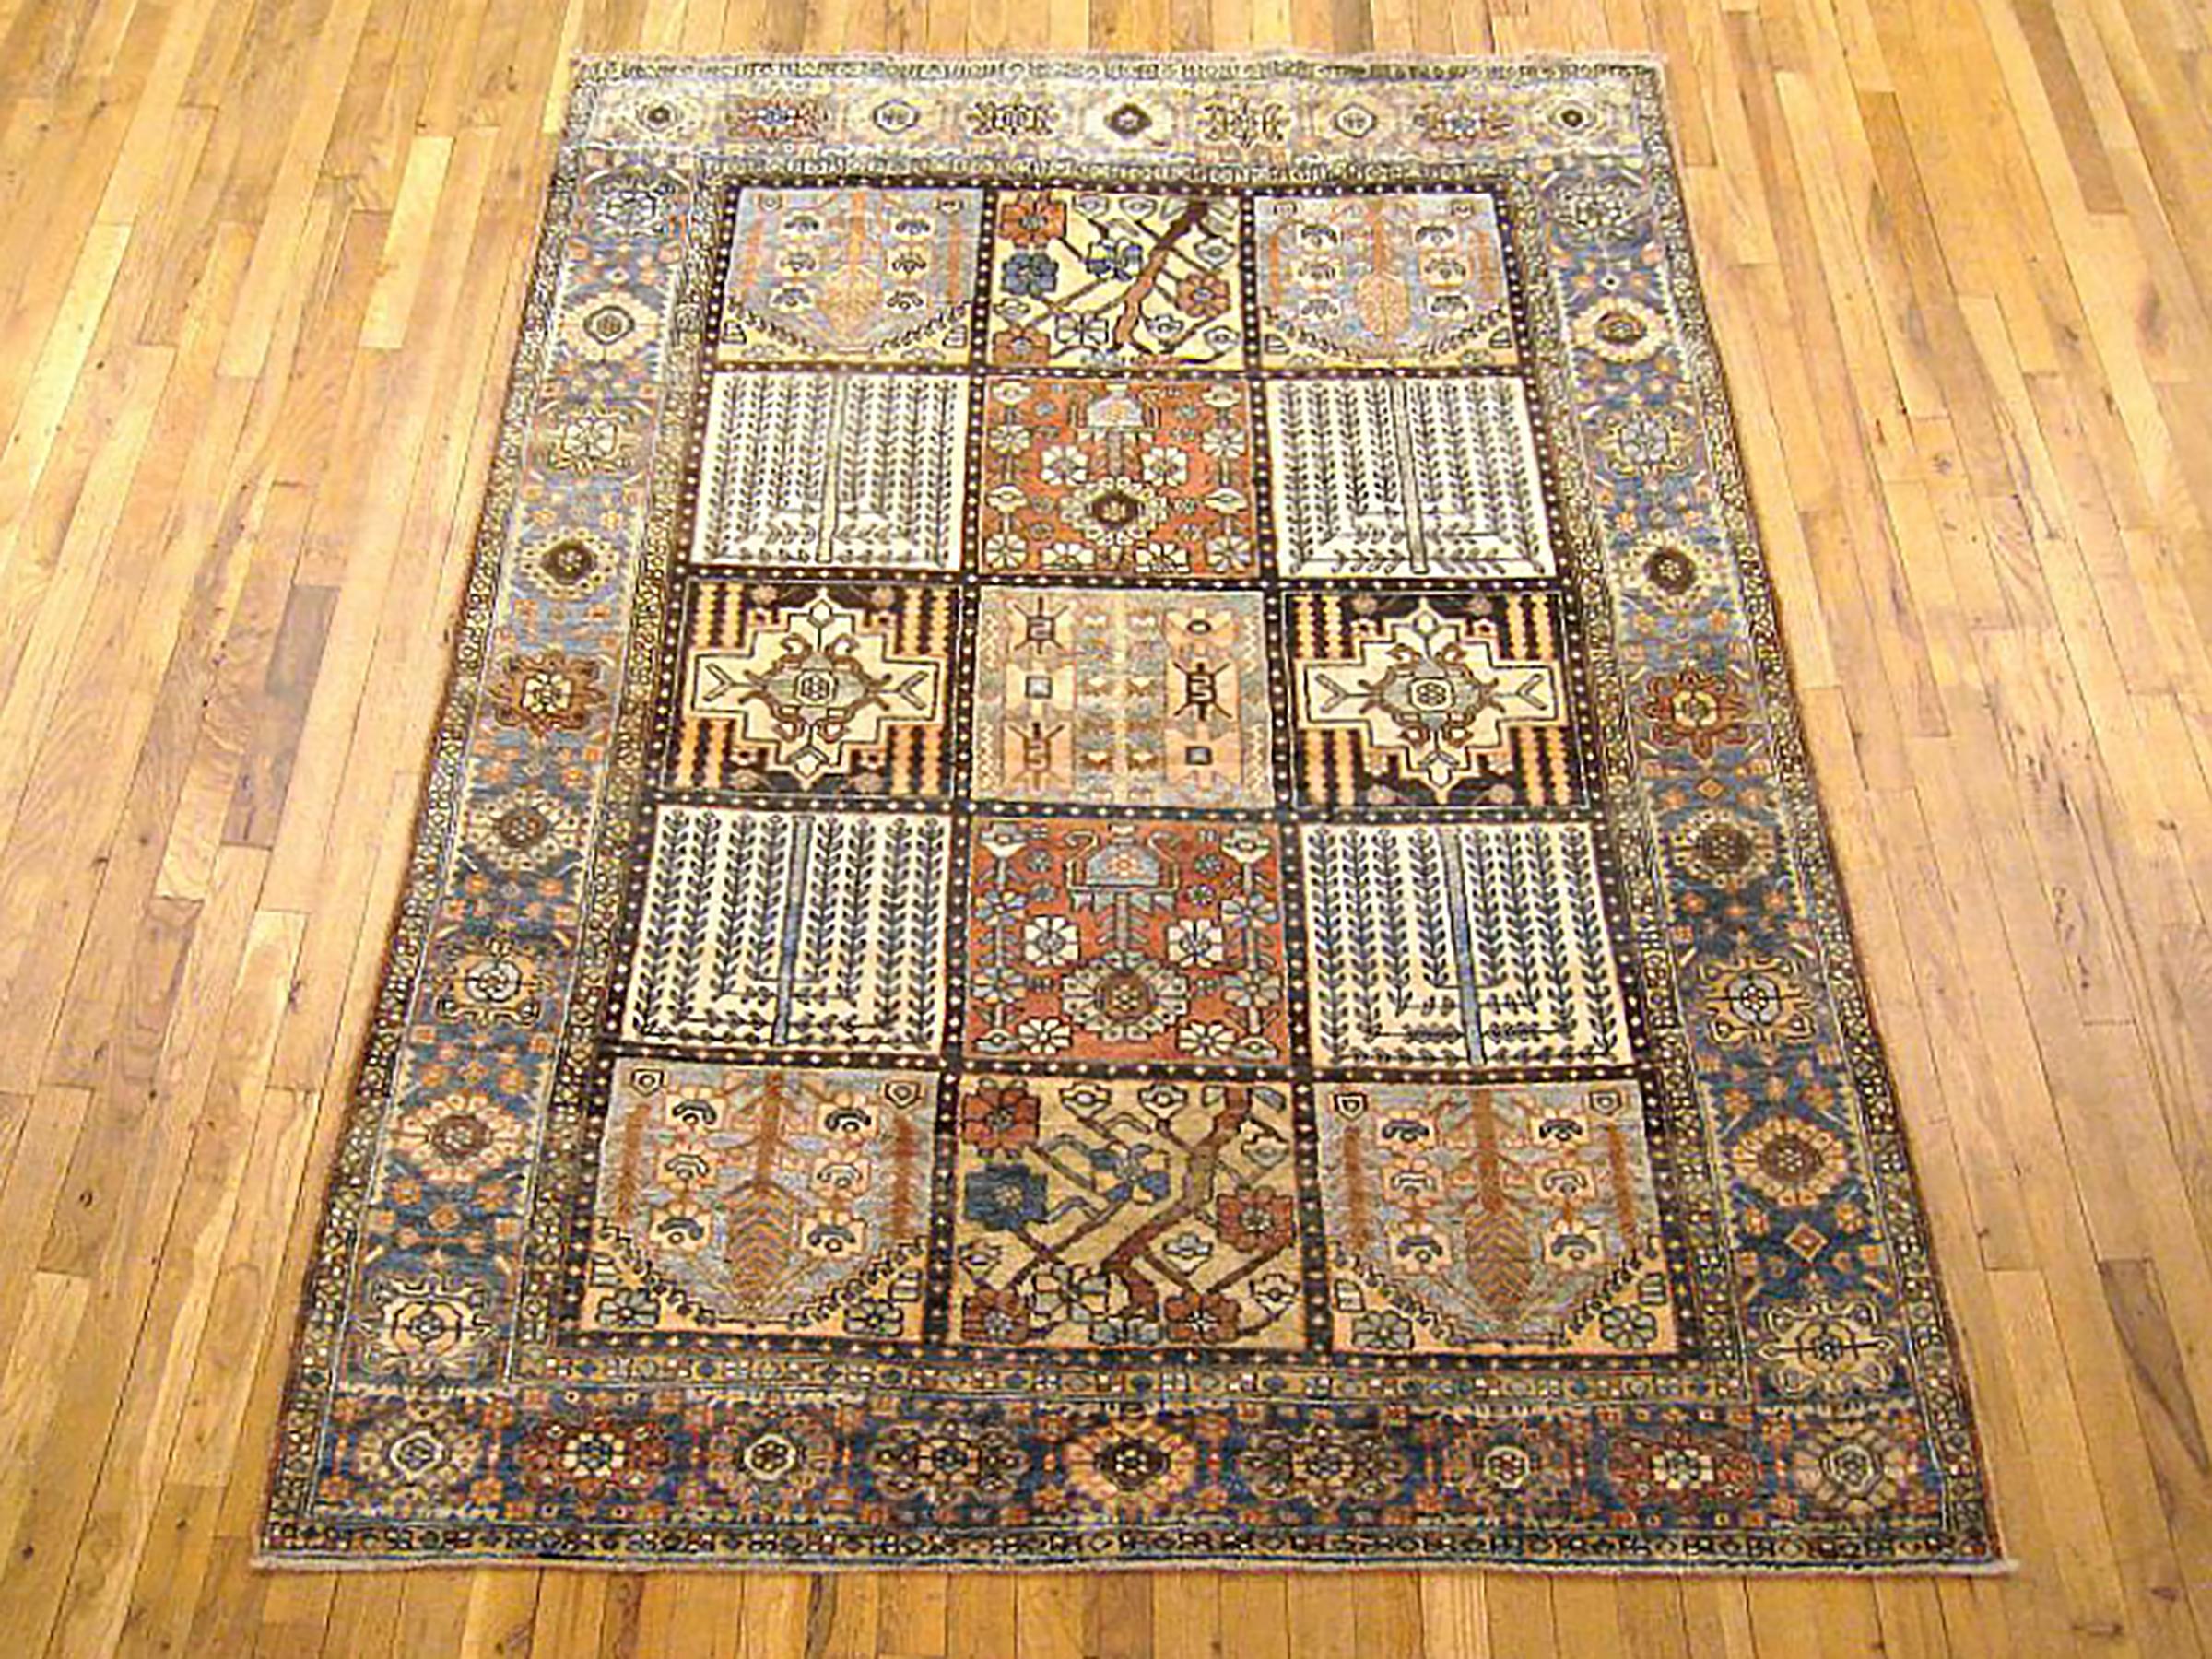 Antique Persian Baktiari Oriental Rug, Small size

An antique Baktiari oriental rug, size 6'10